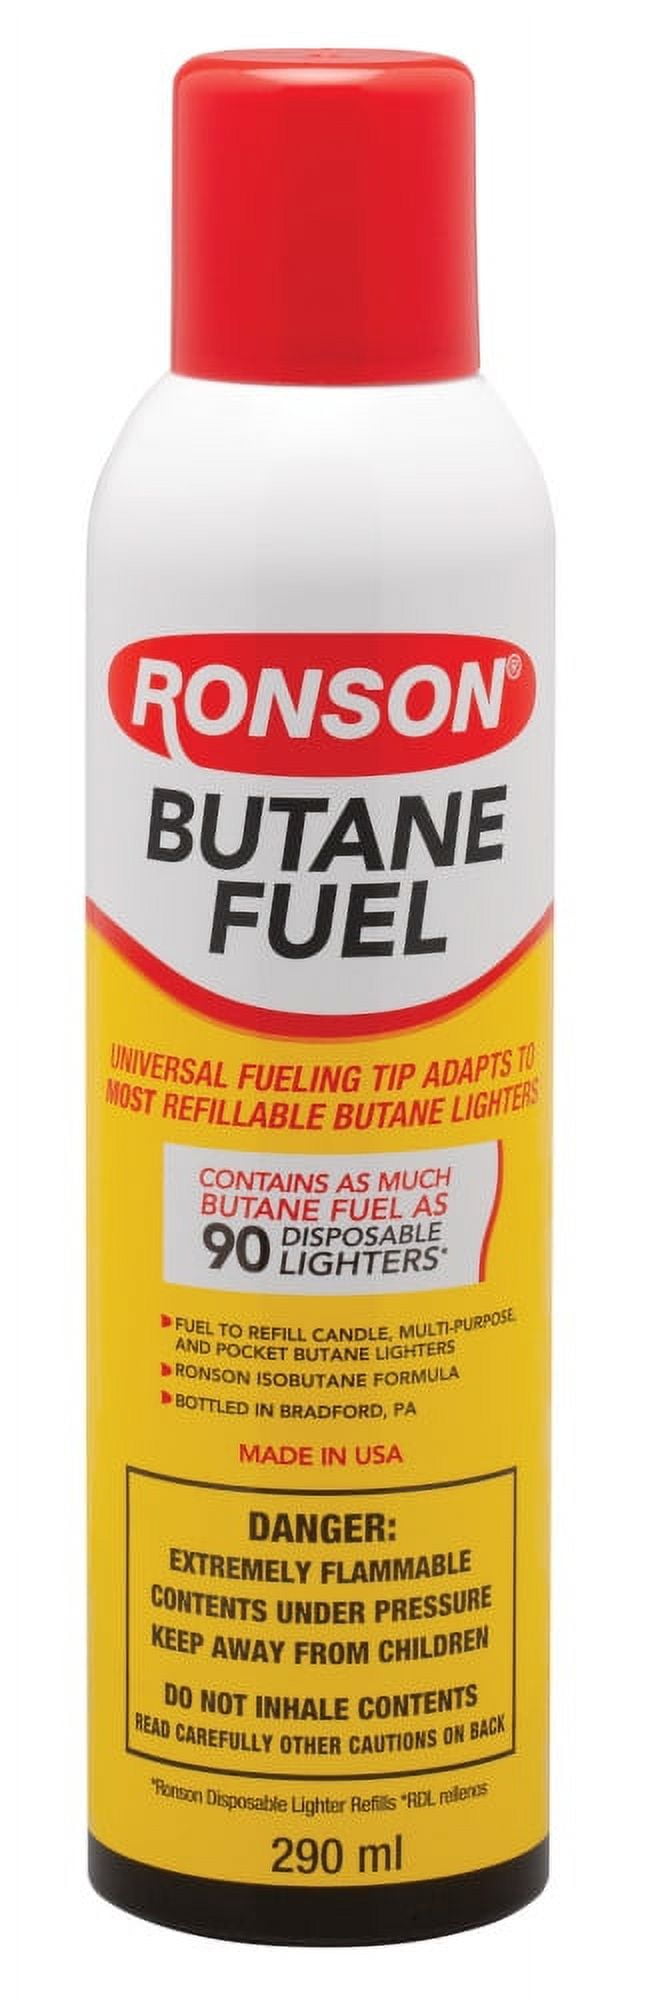 Ronson Multi-Fill Ultra Butane Fuel - 5.82 oz can